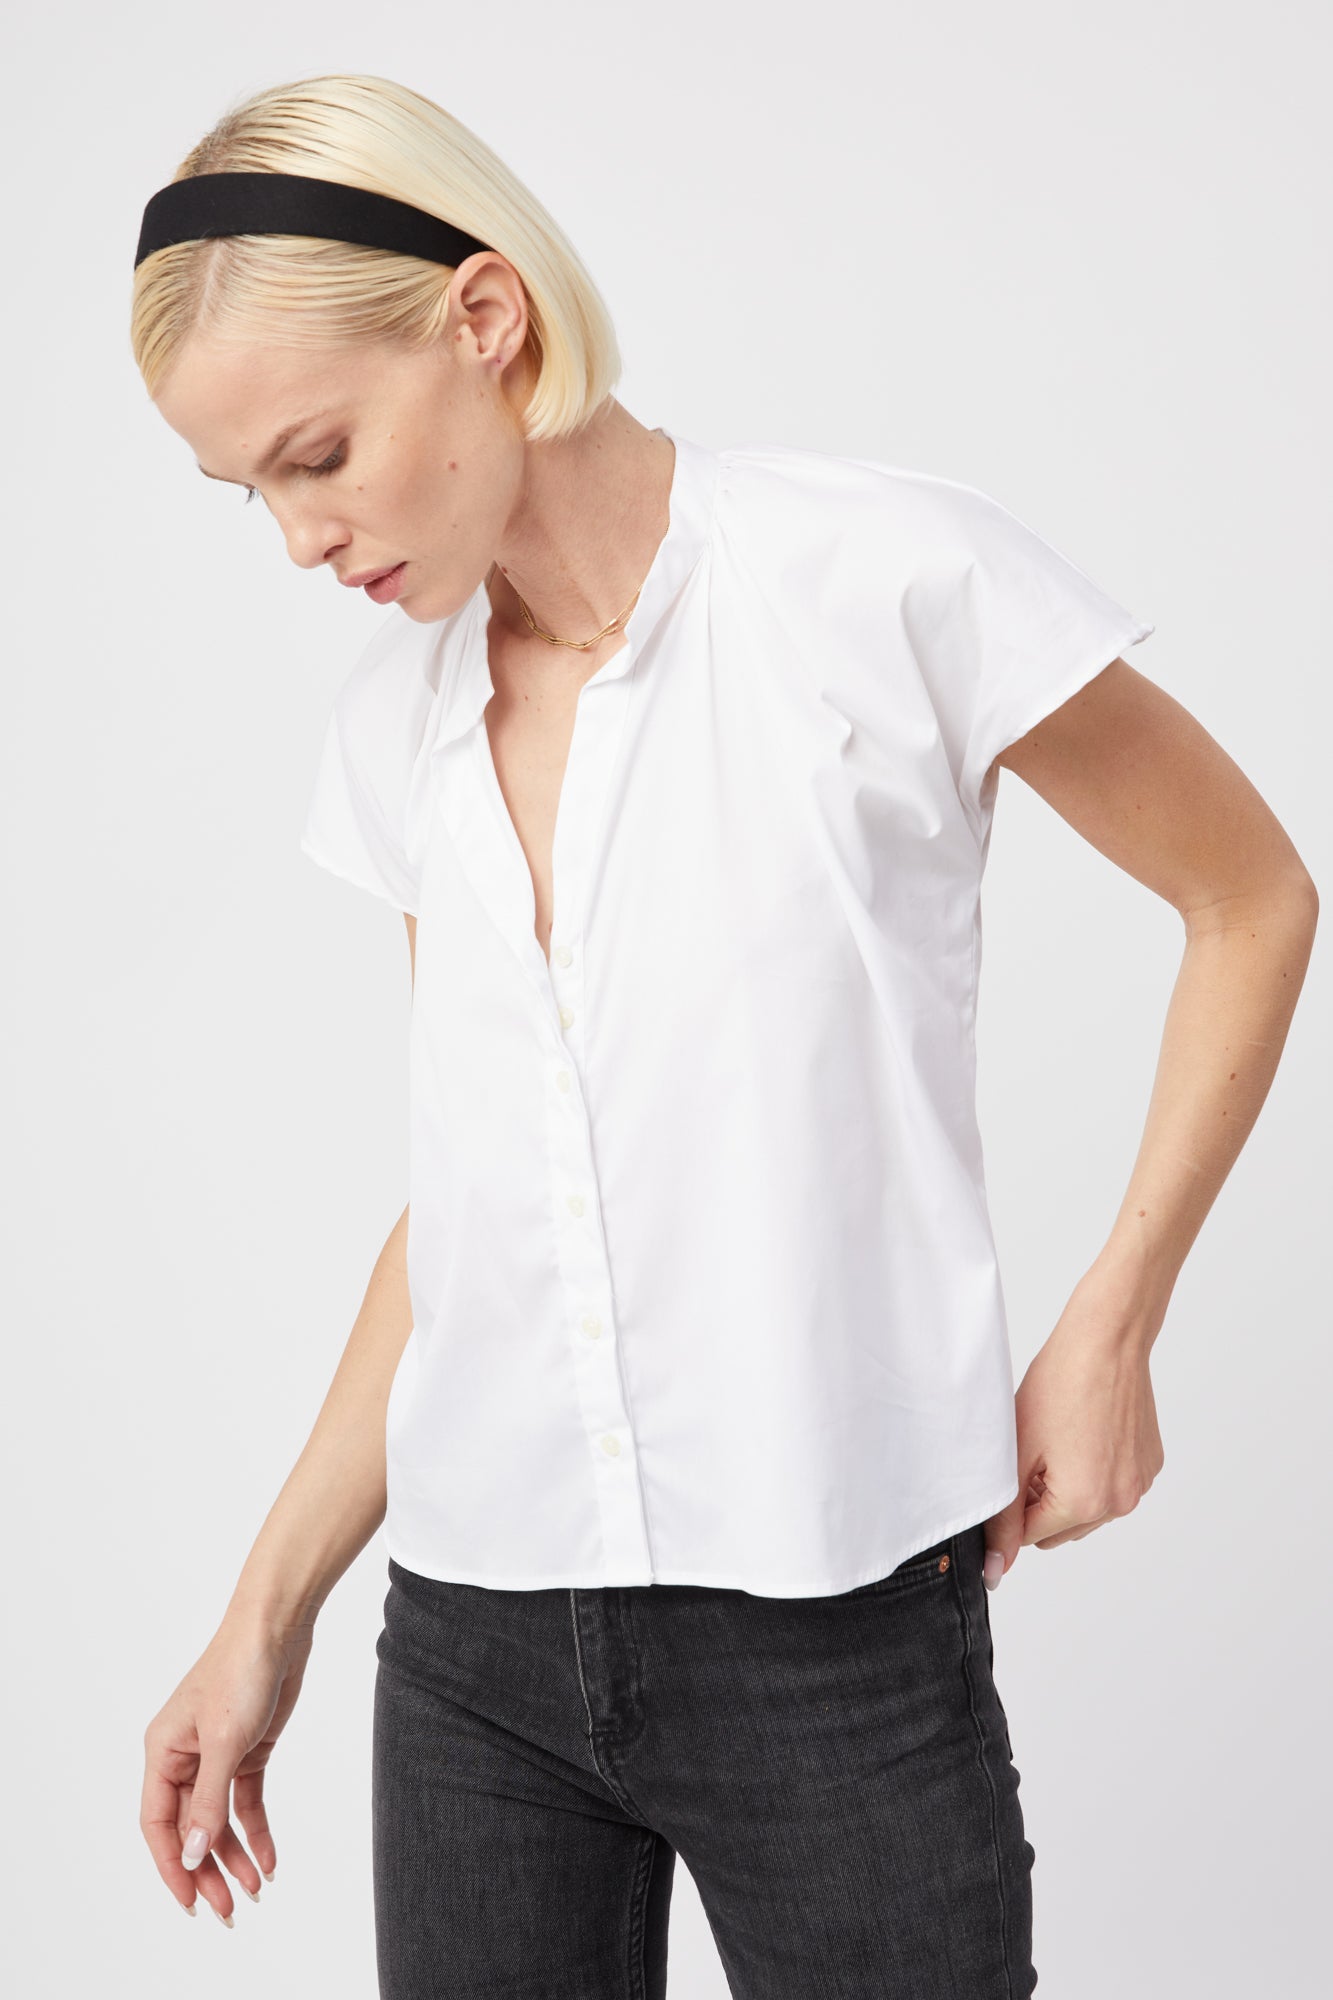 The Shirt Rochelle Behrens, White Button Down Shirts